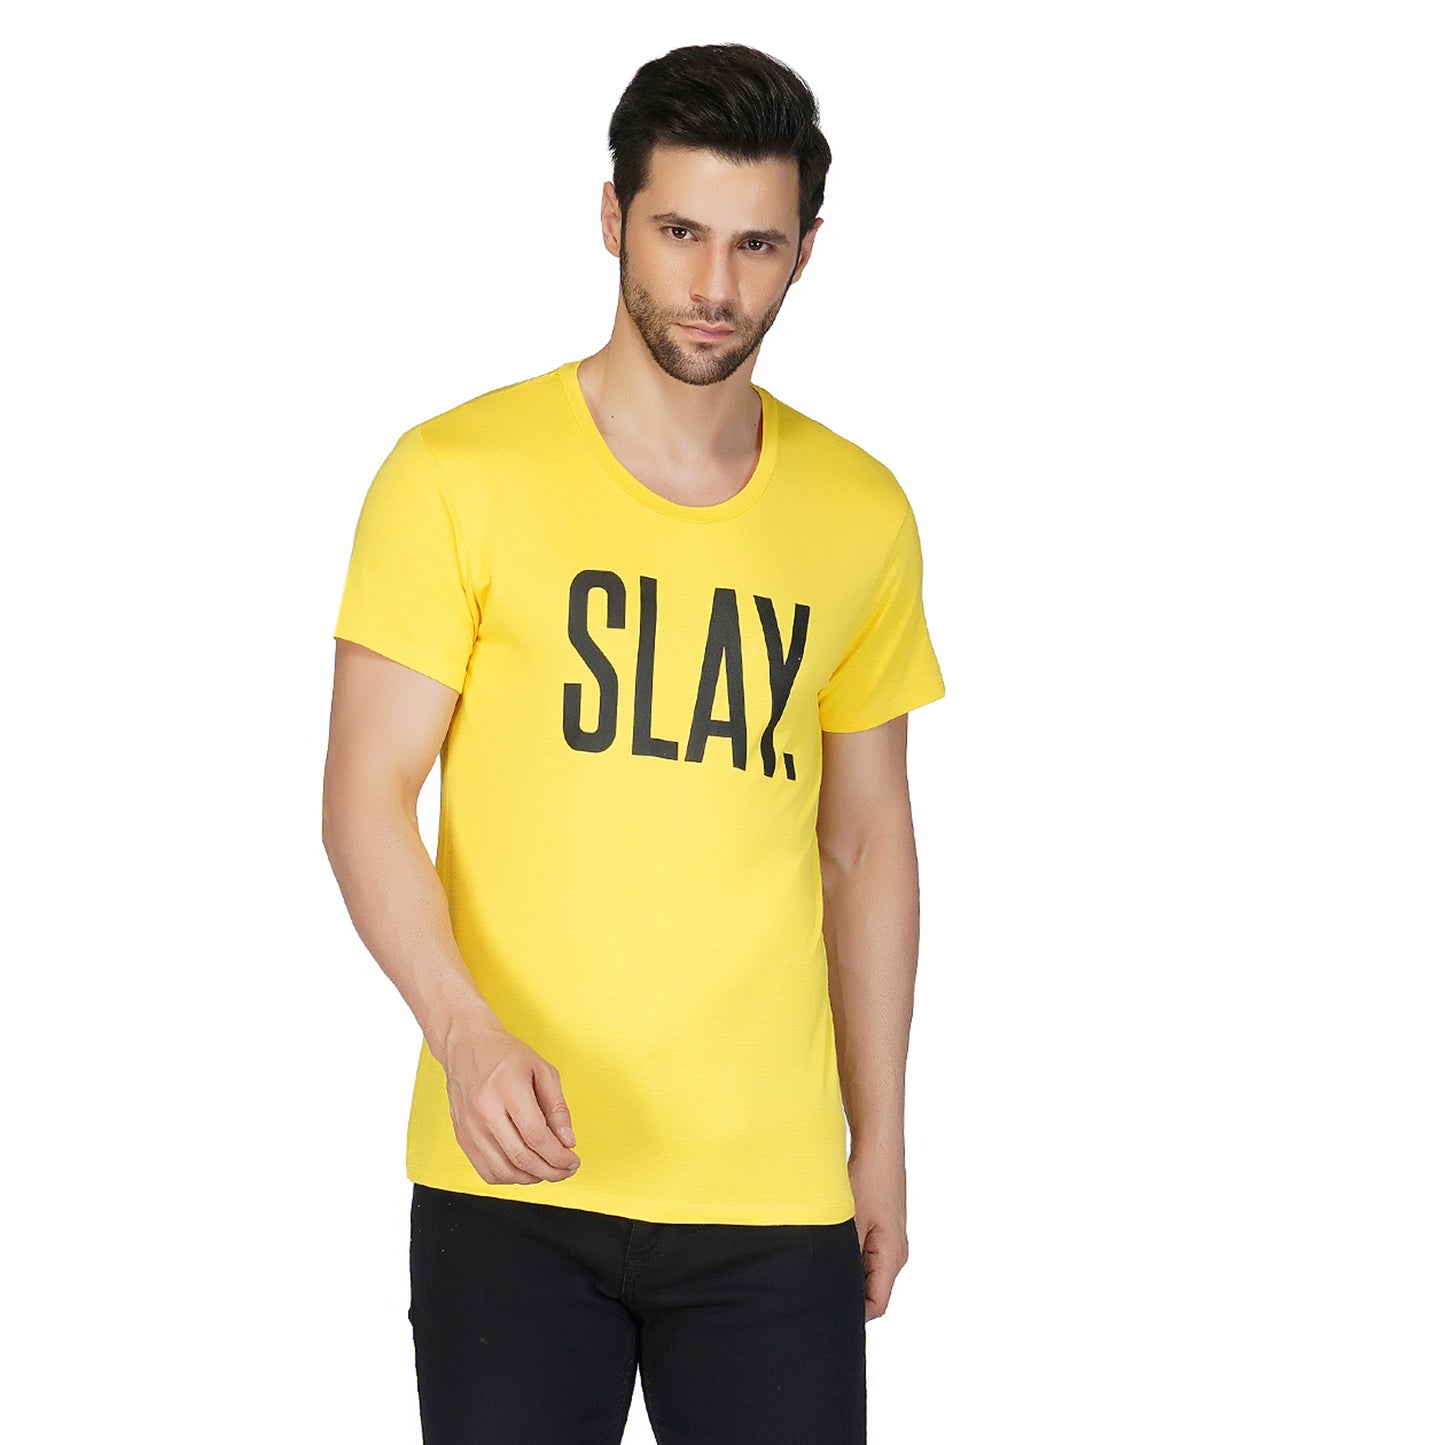 SLAY. Men's Yellow Printed T-Shirt